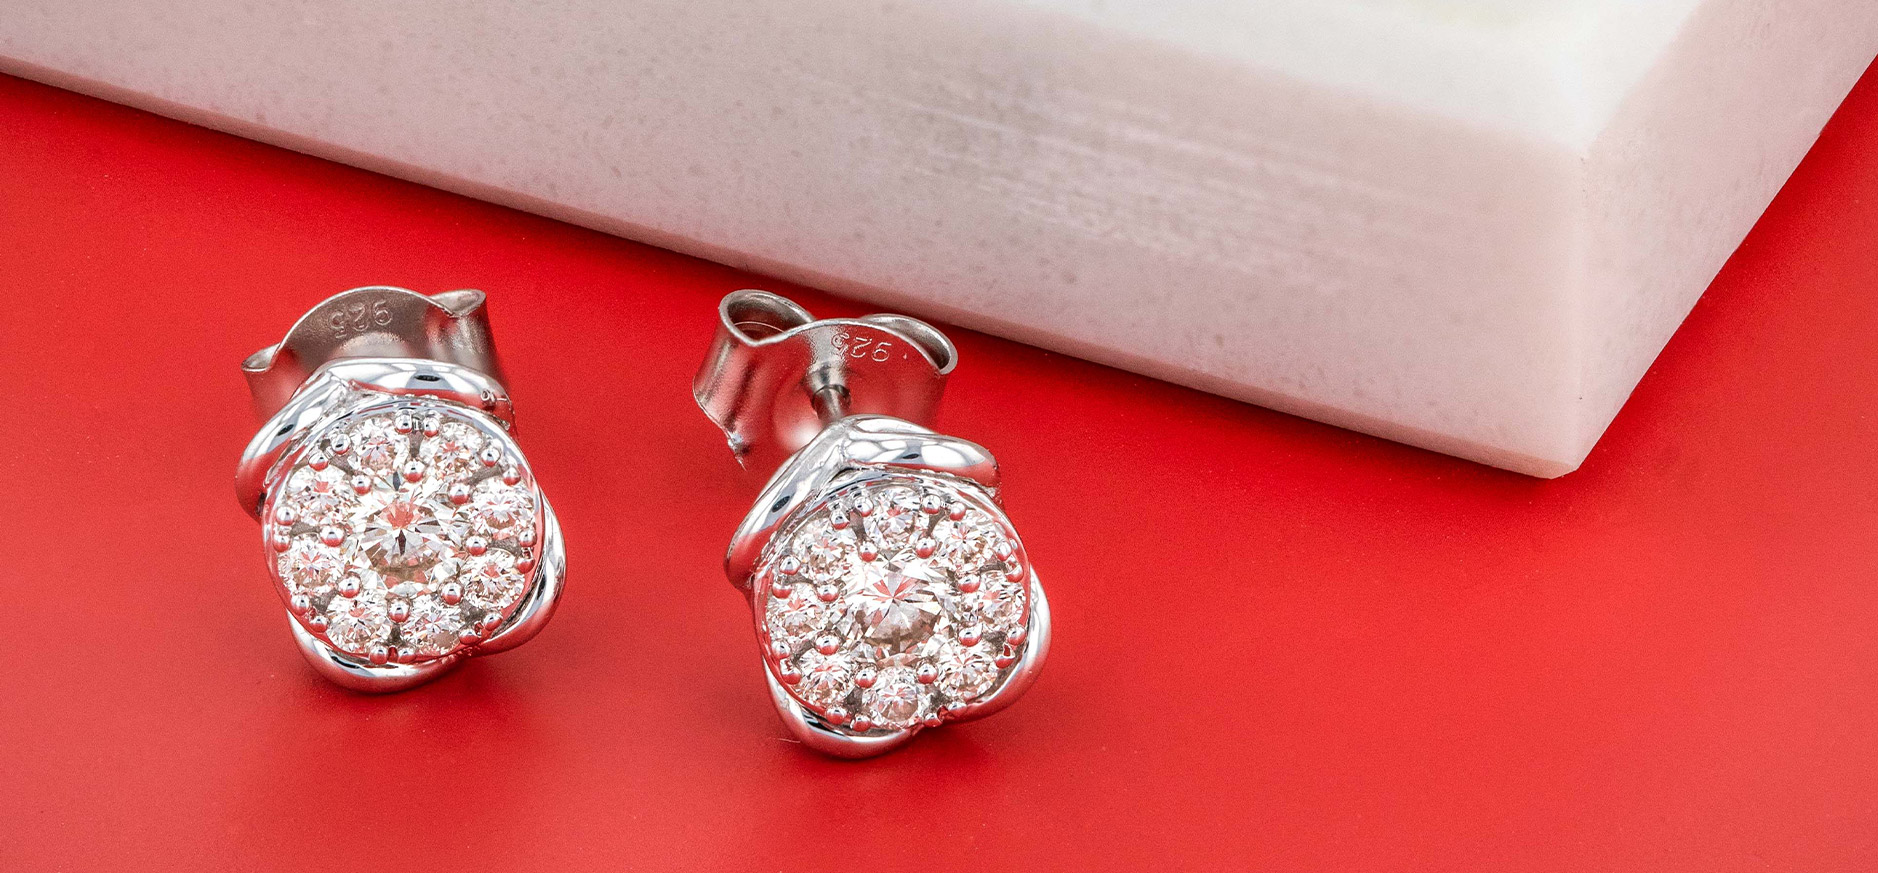 diamond earrings buying guide - how to choose diamond earrings